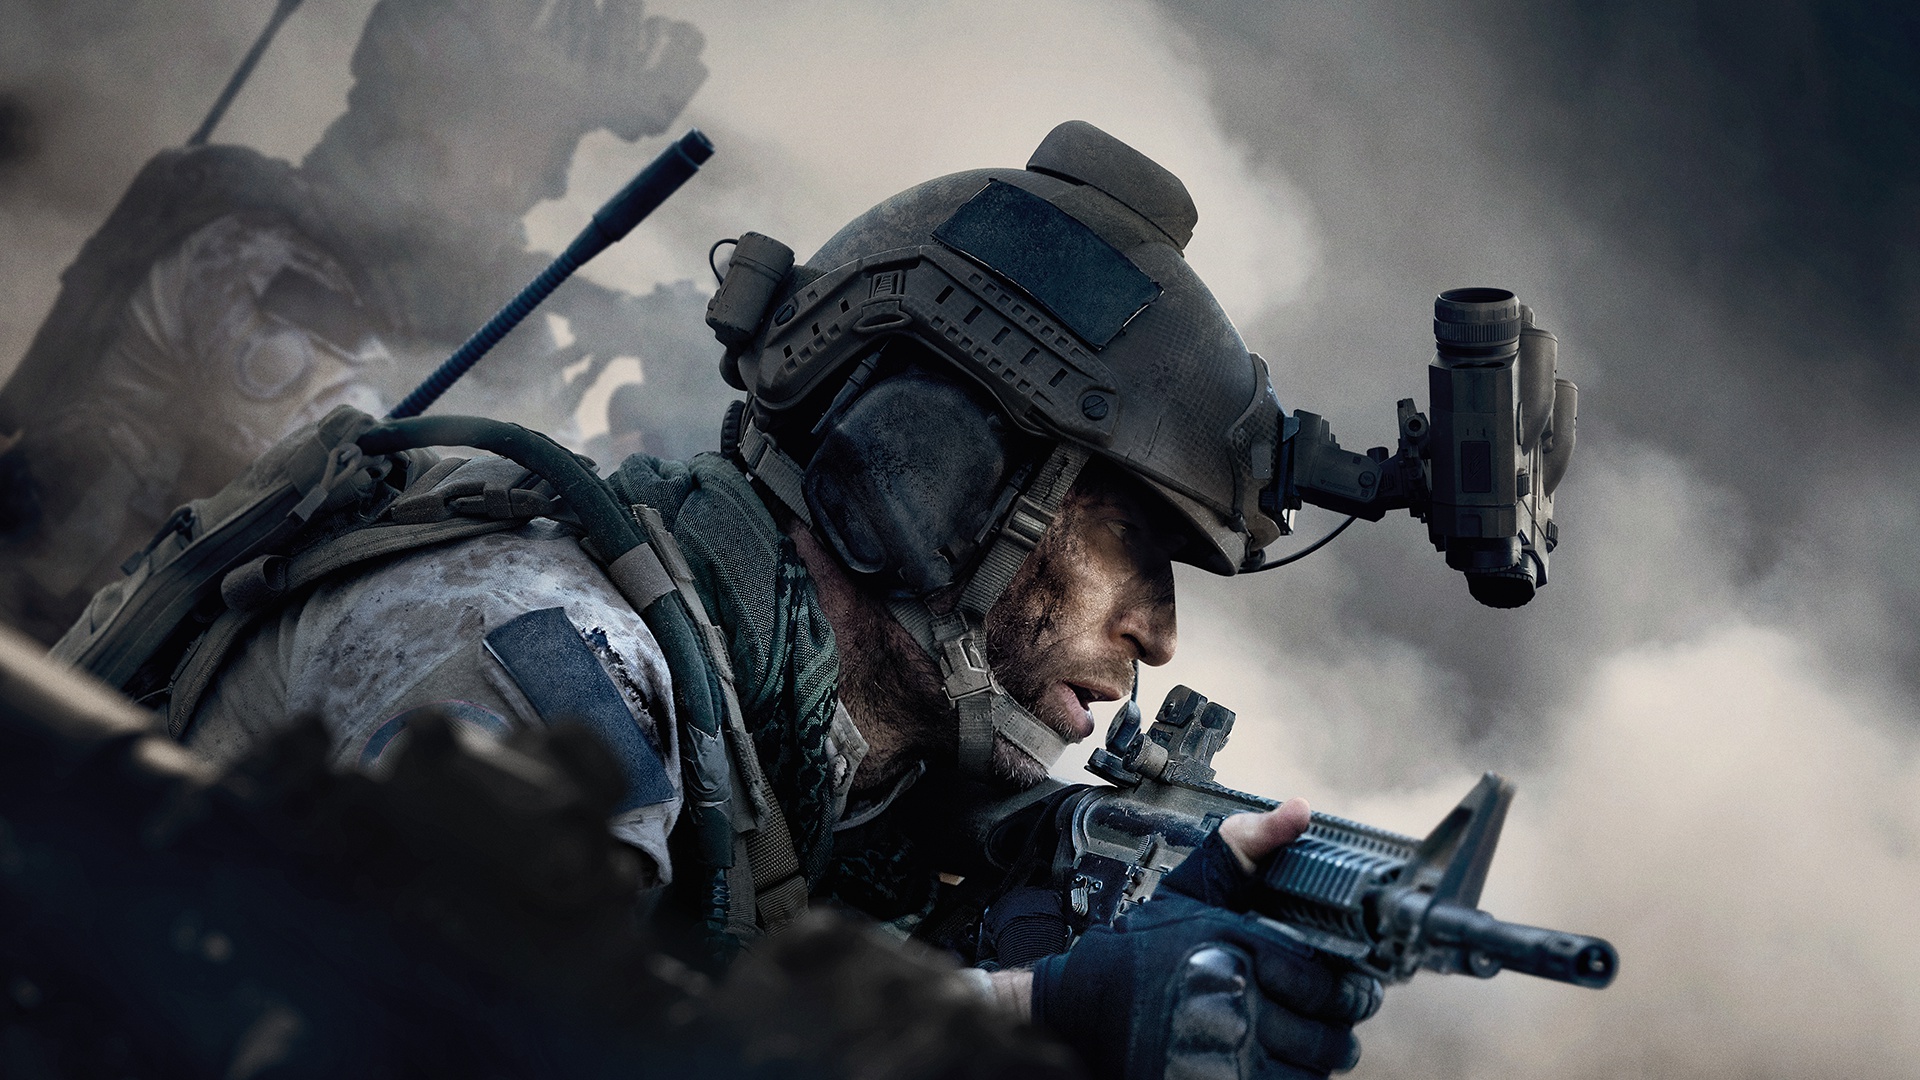 Call of Duty: Modern Warfare HD Wallpaper and Background